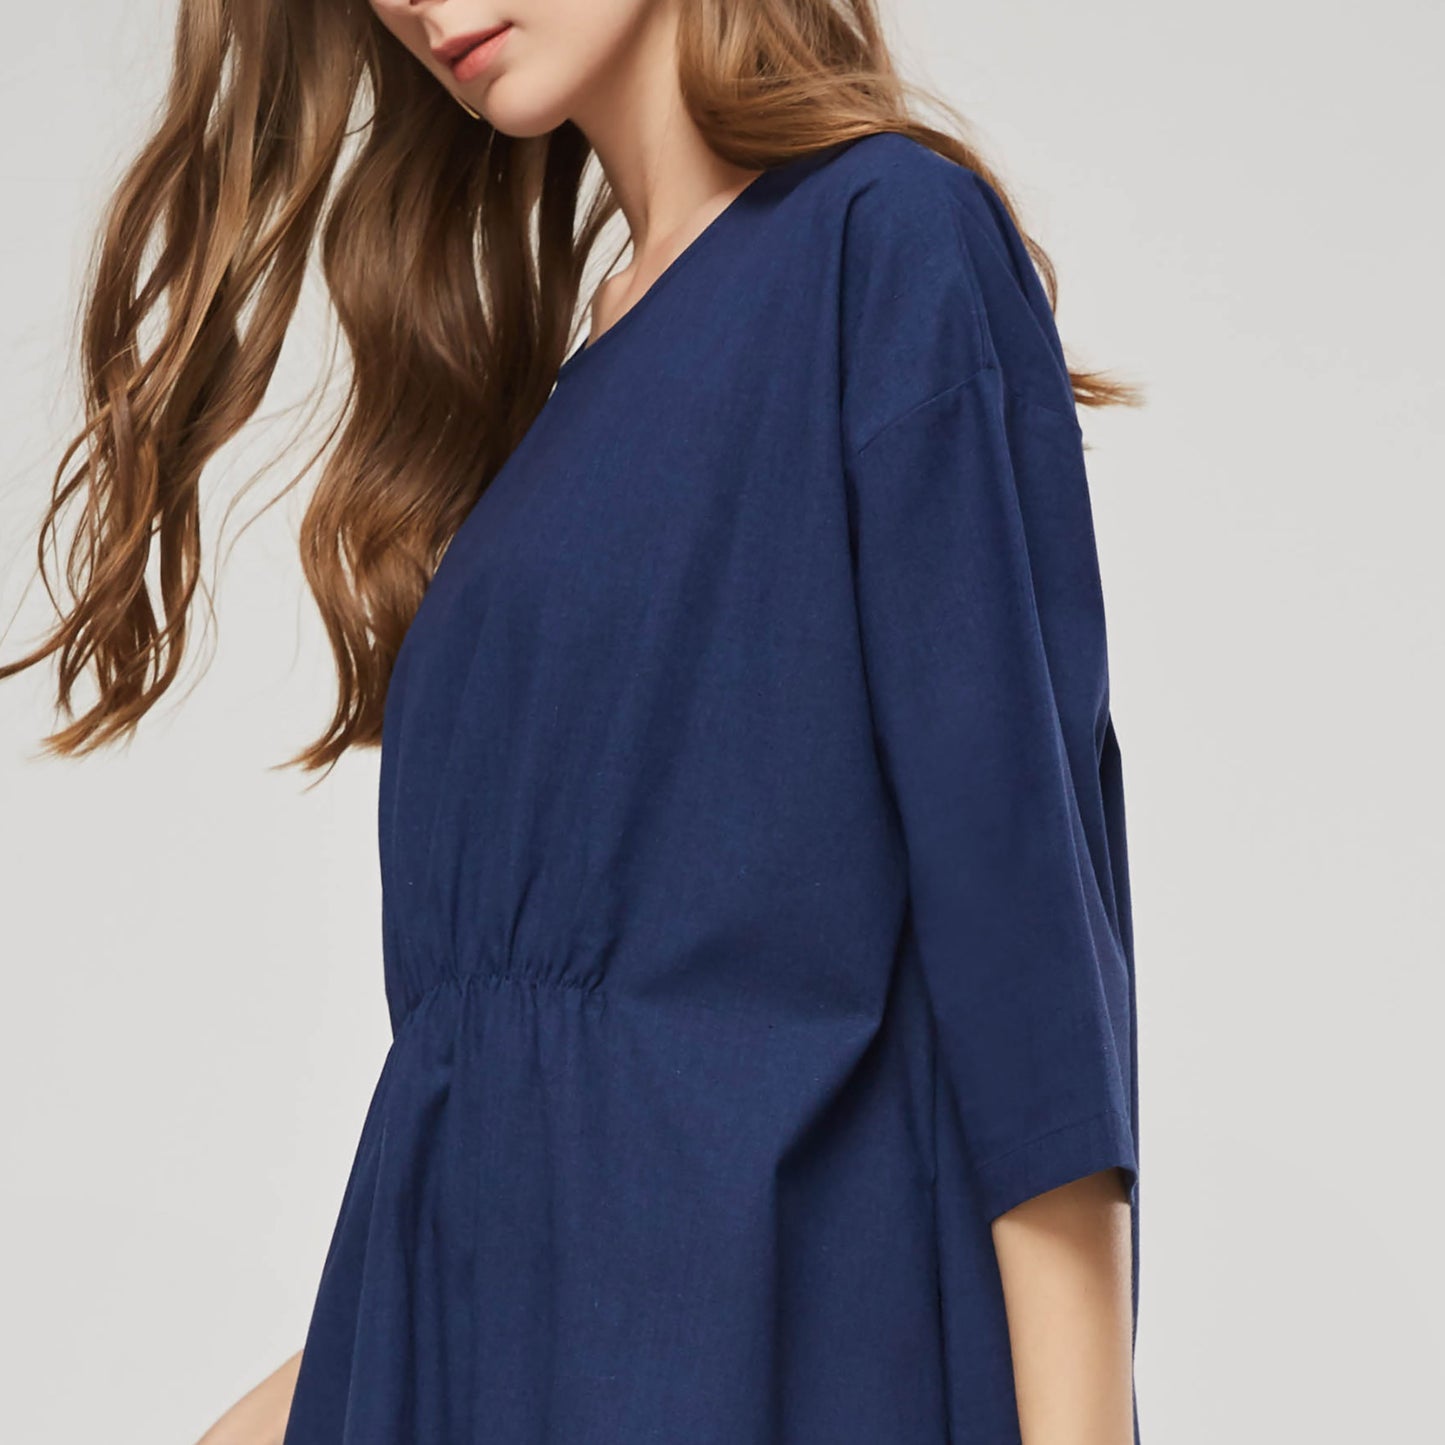 Half Sleeve Pocket Mid-Calf Round Neck Pullover Women's Dress